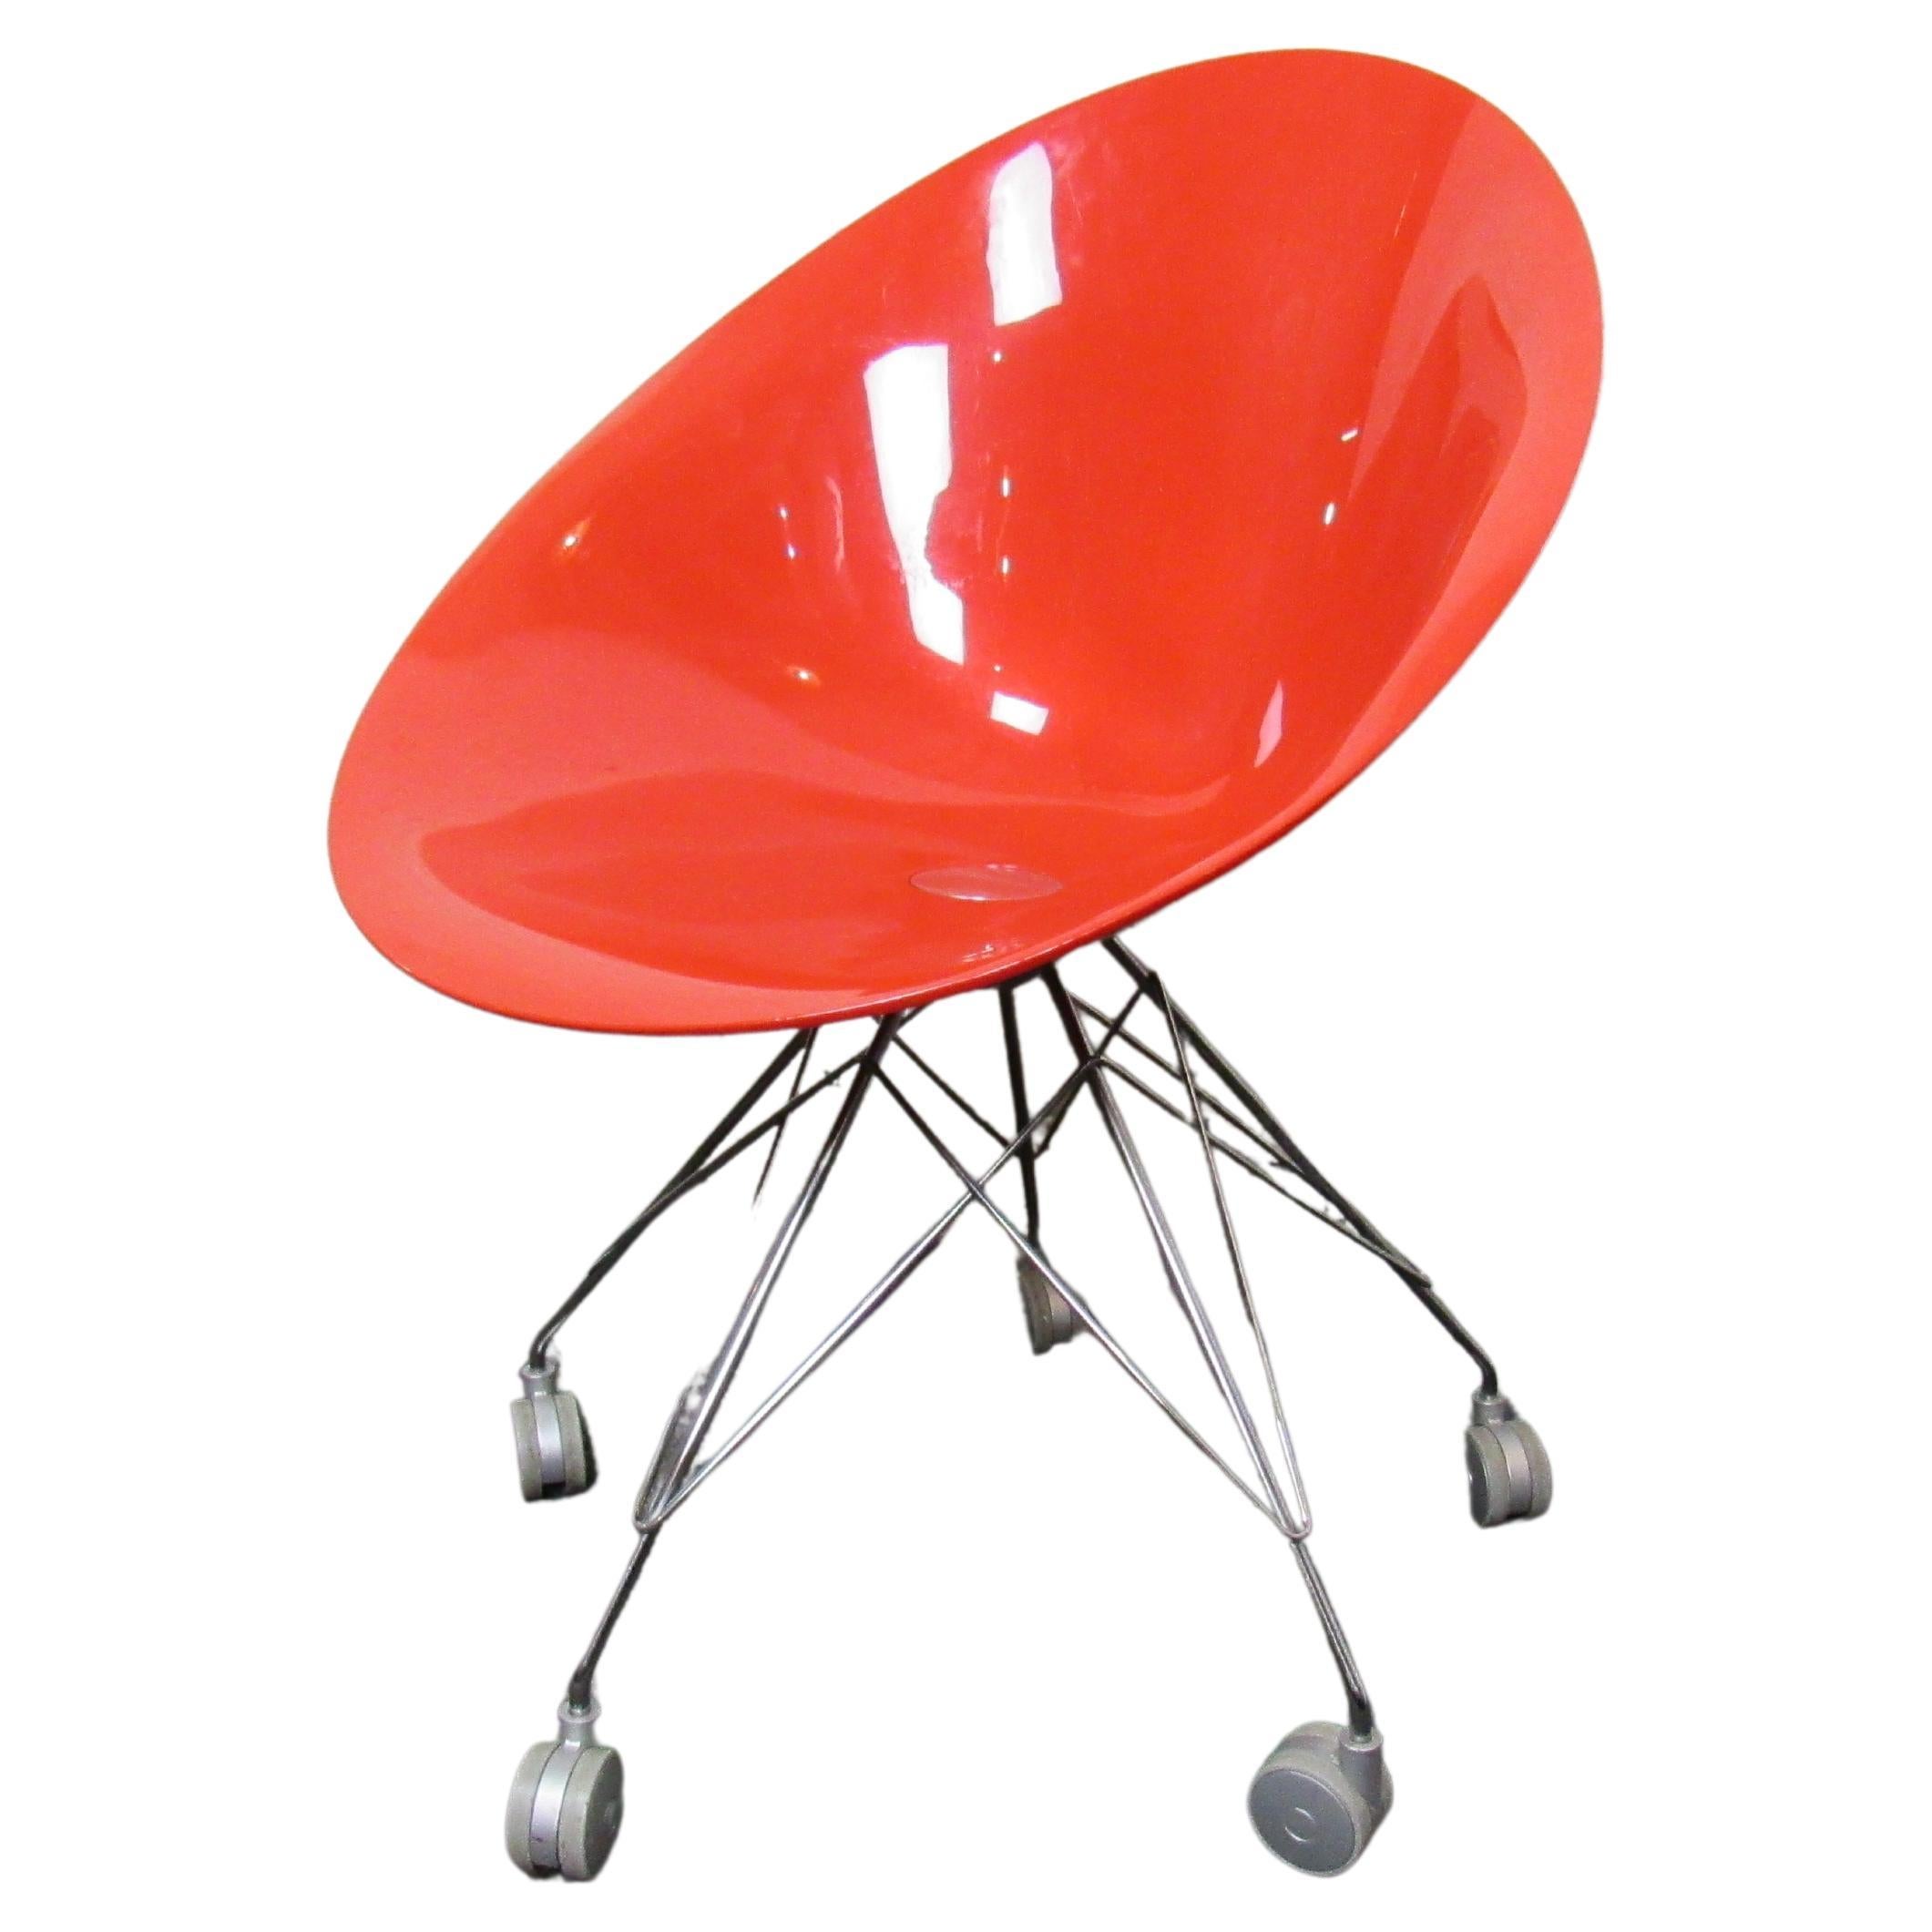 EroS Desk Chair by Philippe Starck for Kartell